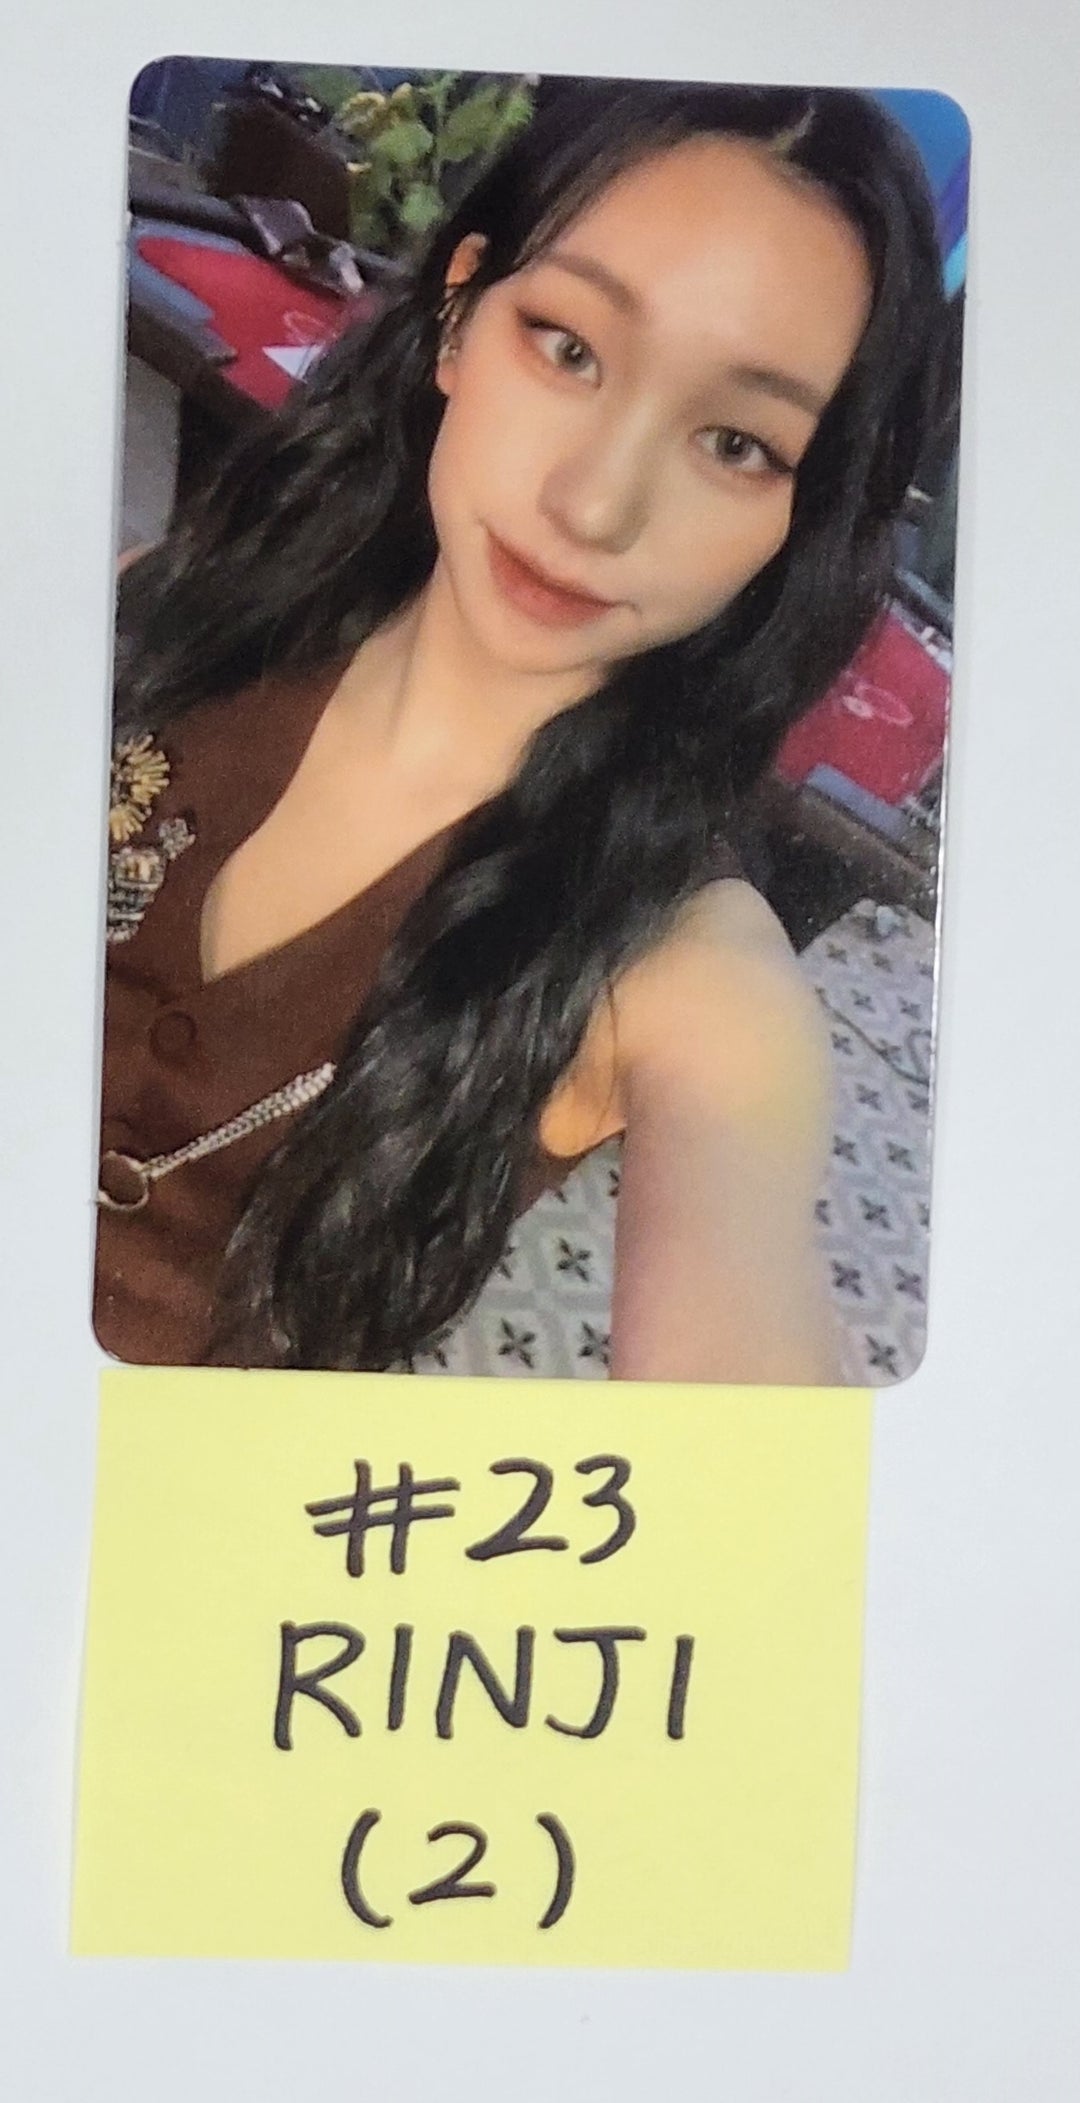 Pixy 'CHOSEN KARMA' - Official Photocard, Scratch Message Card